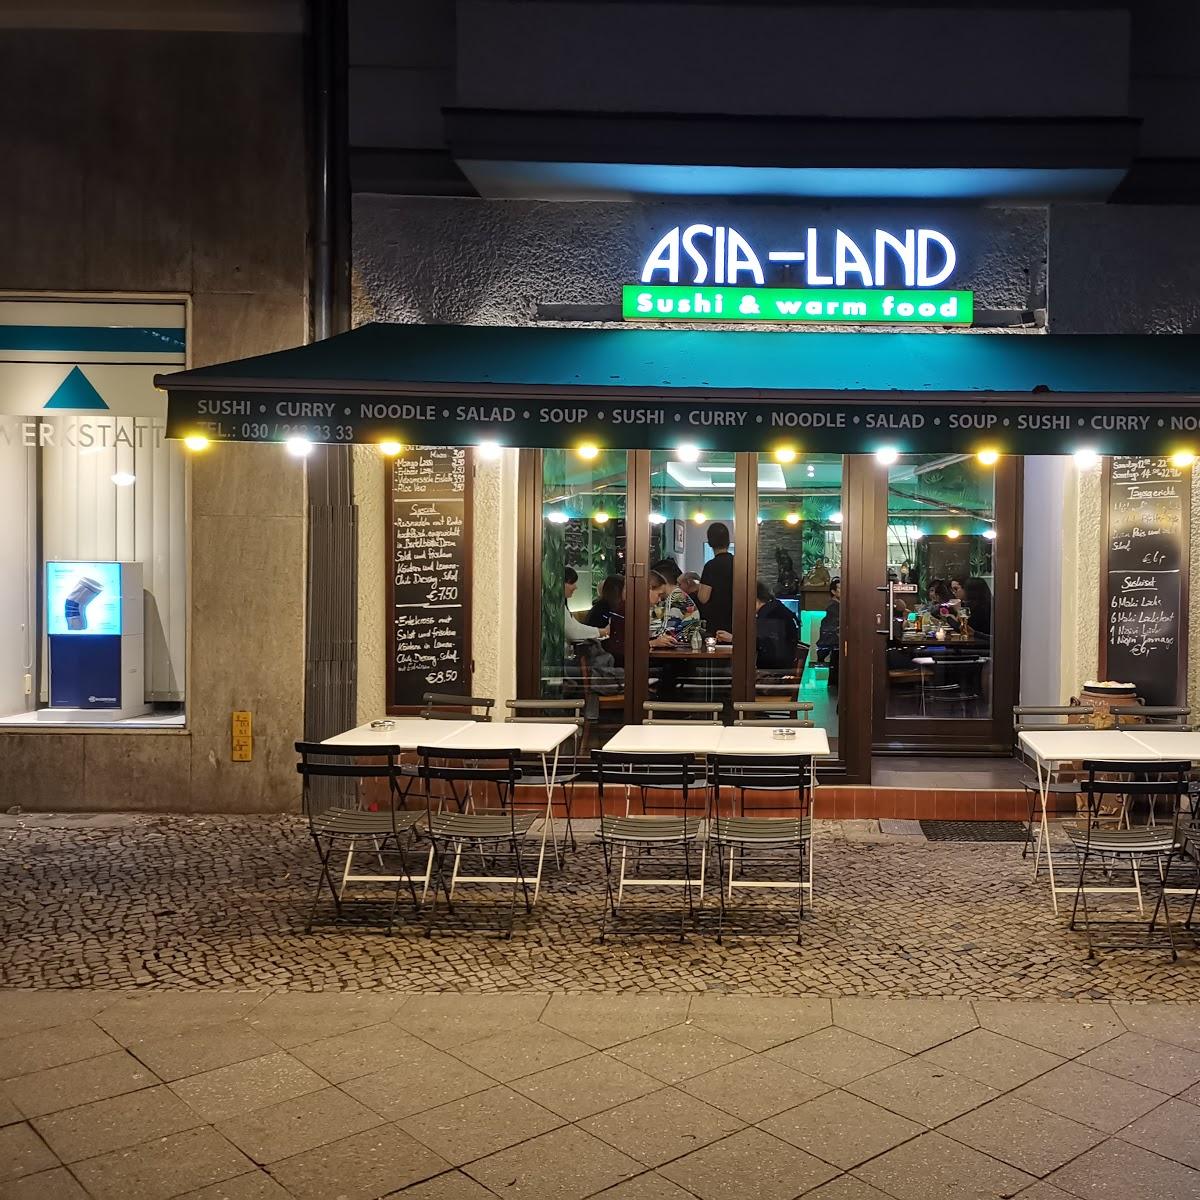 Restaurant "Asia Land" in  Berlin